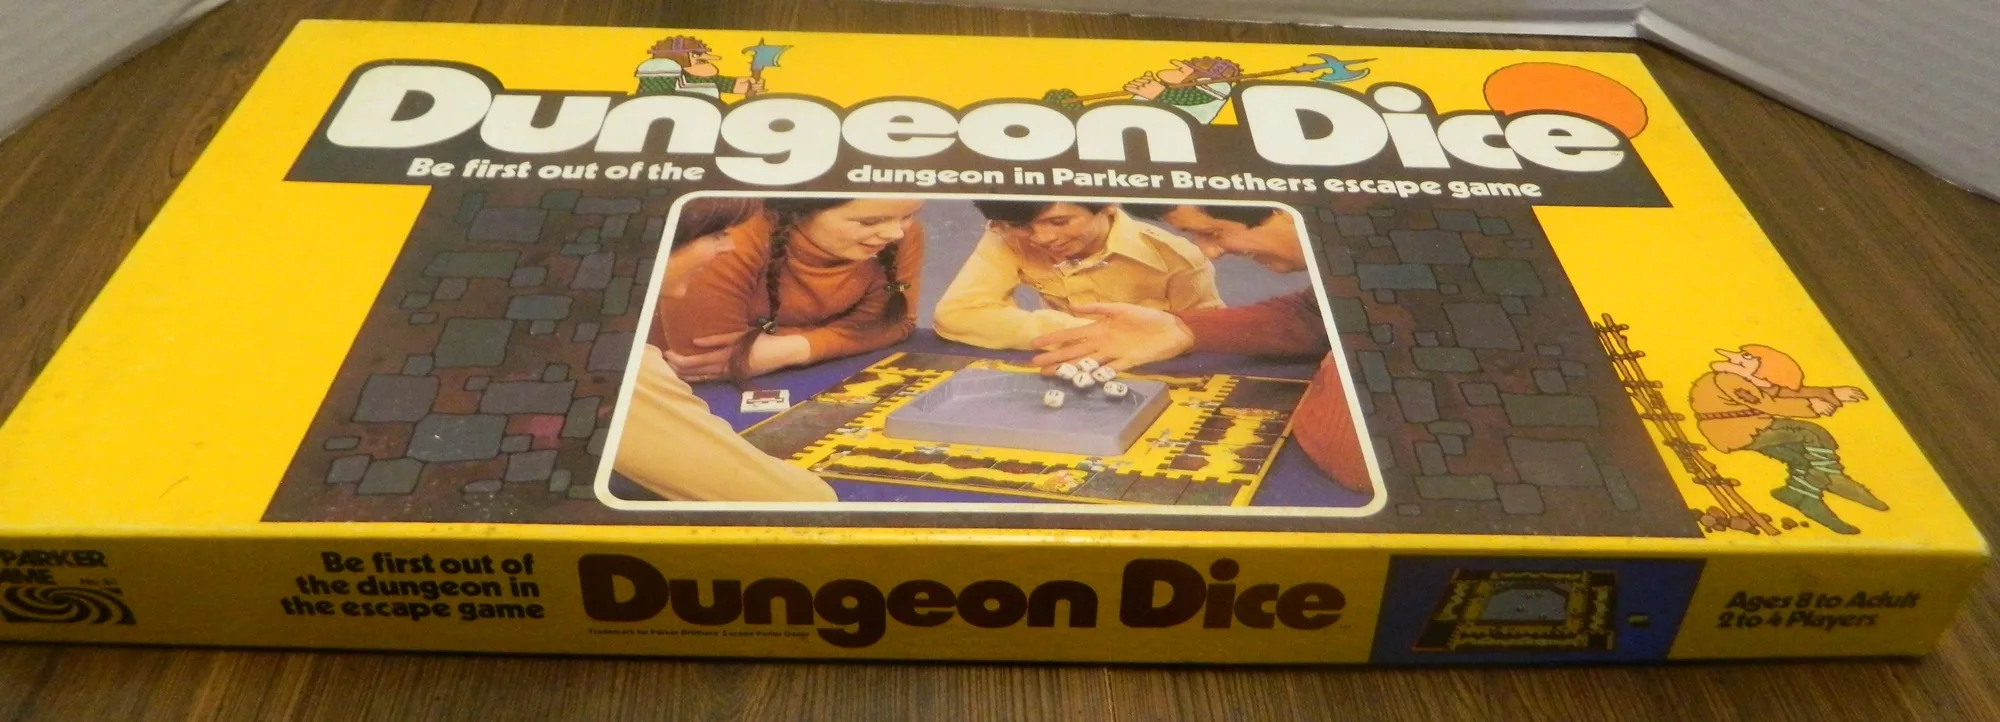 Dungeon Dice Box